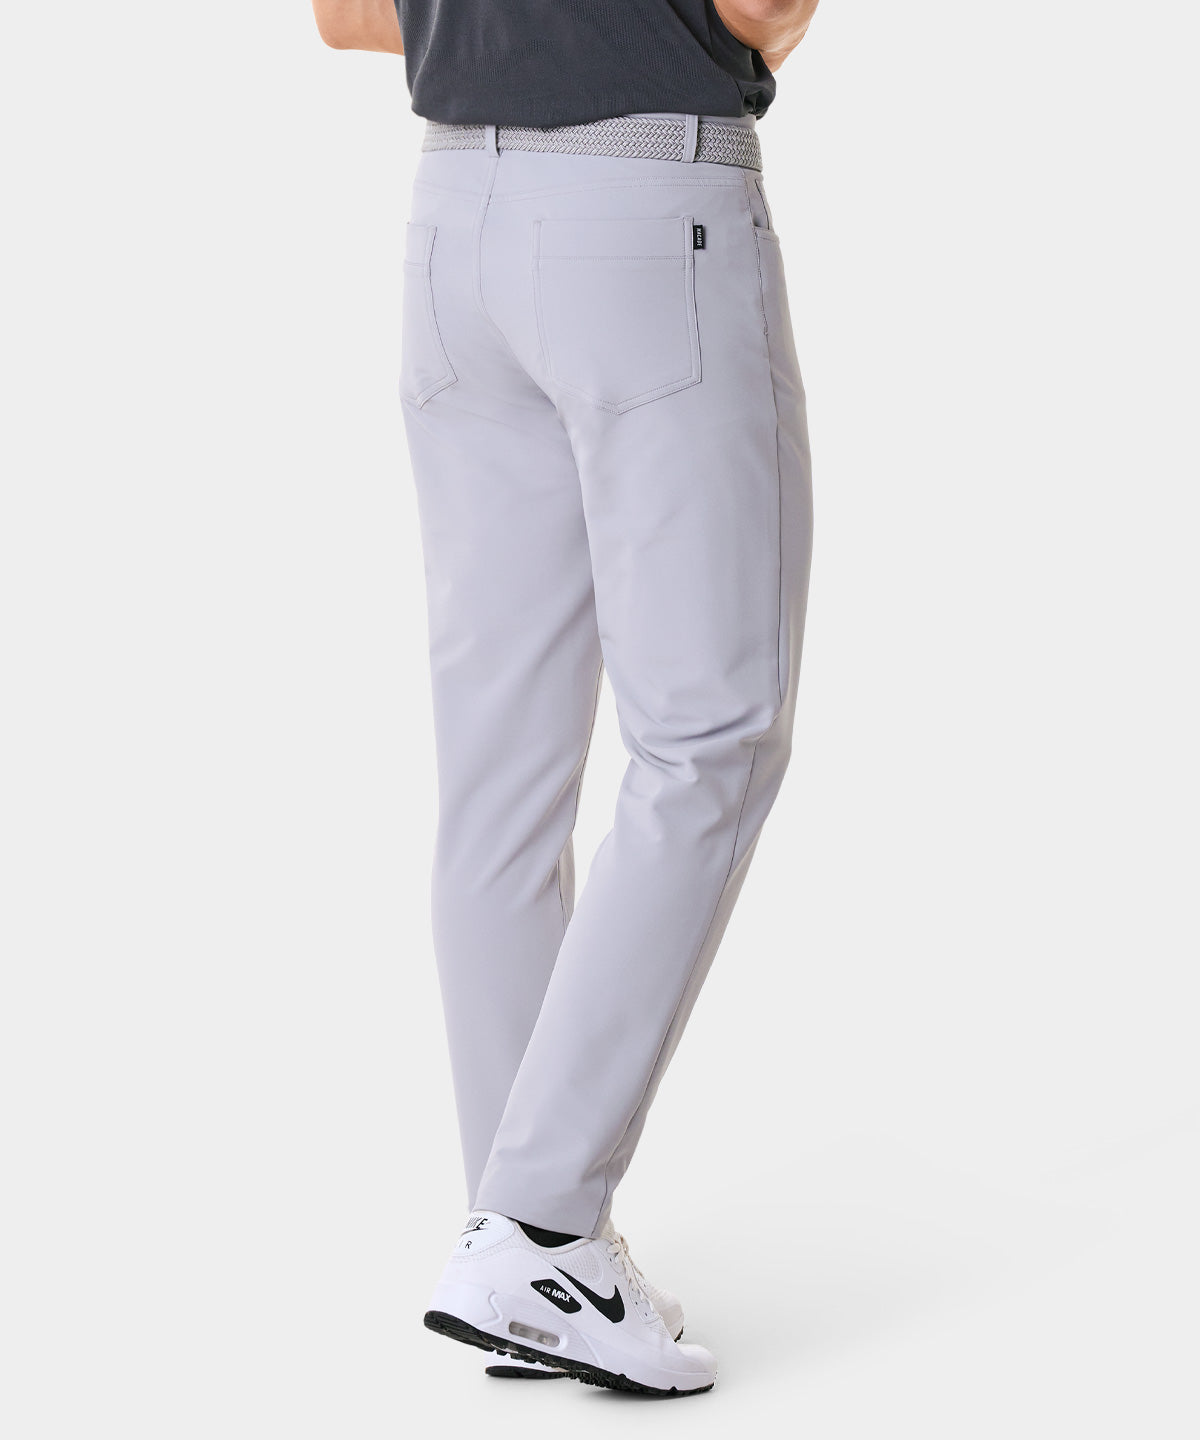 Travis Light Grey Stretch Trouser